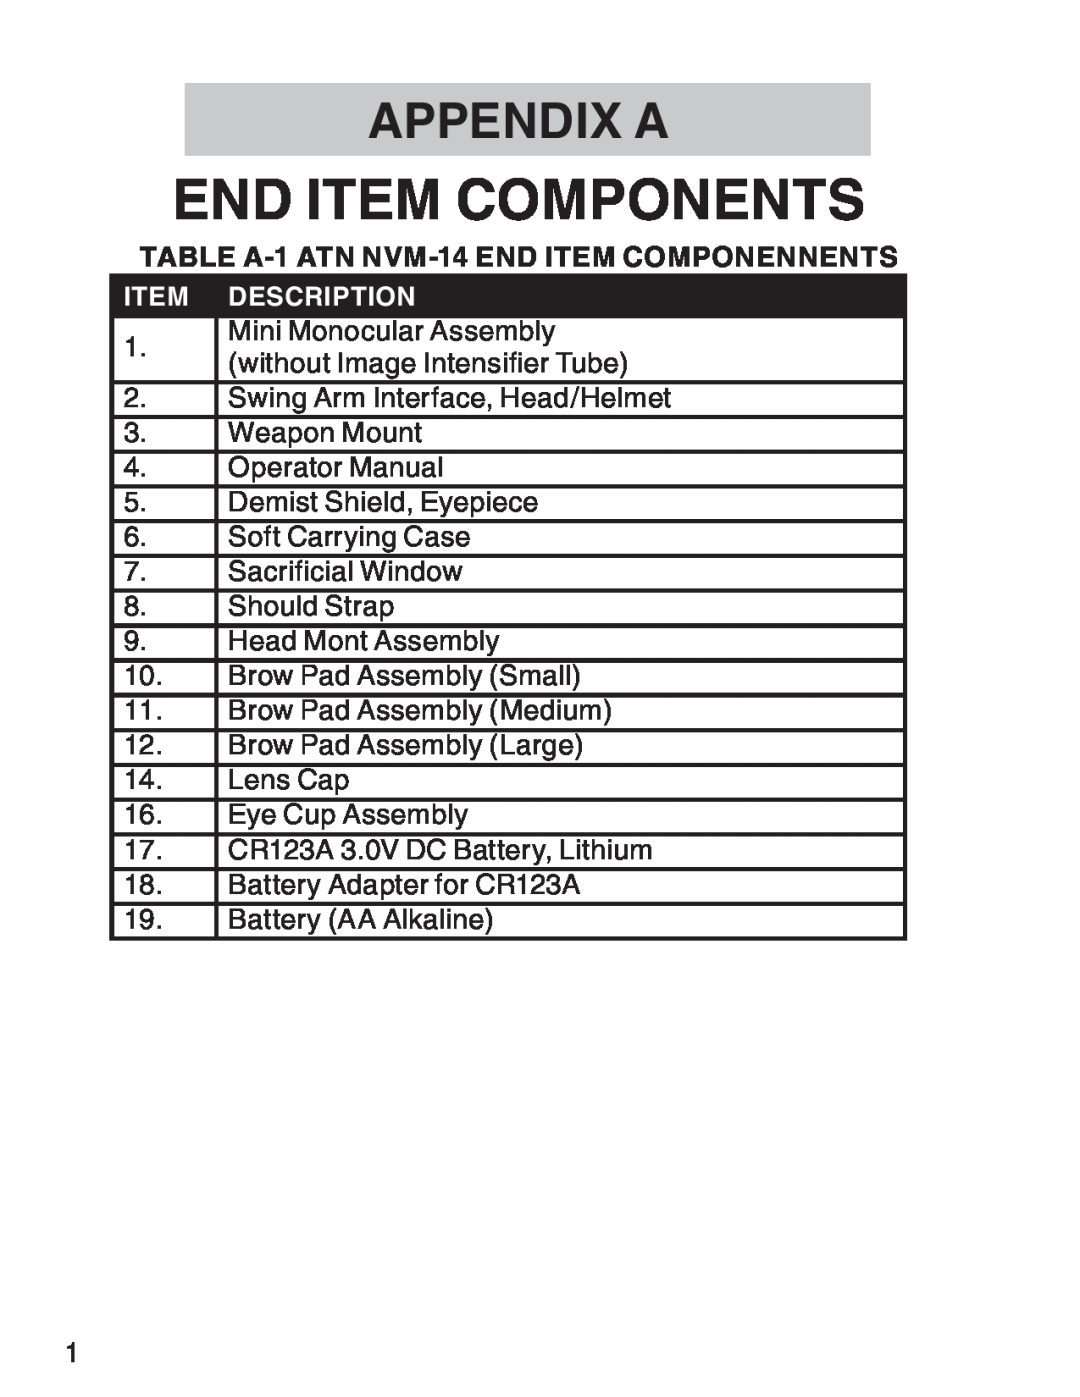 ATN 3 manual End Item Components, Appendix A, TABLE A-1 ATN NVM-14 End Item Componennents 